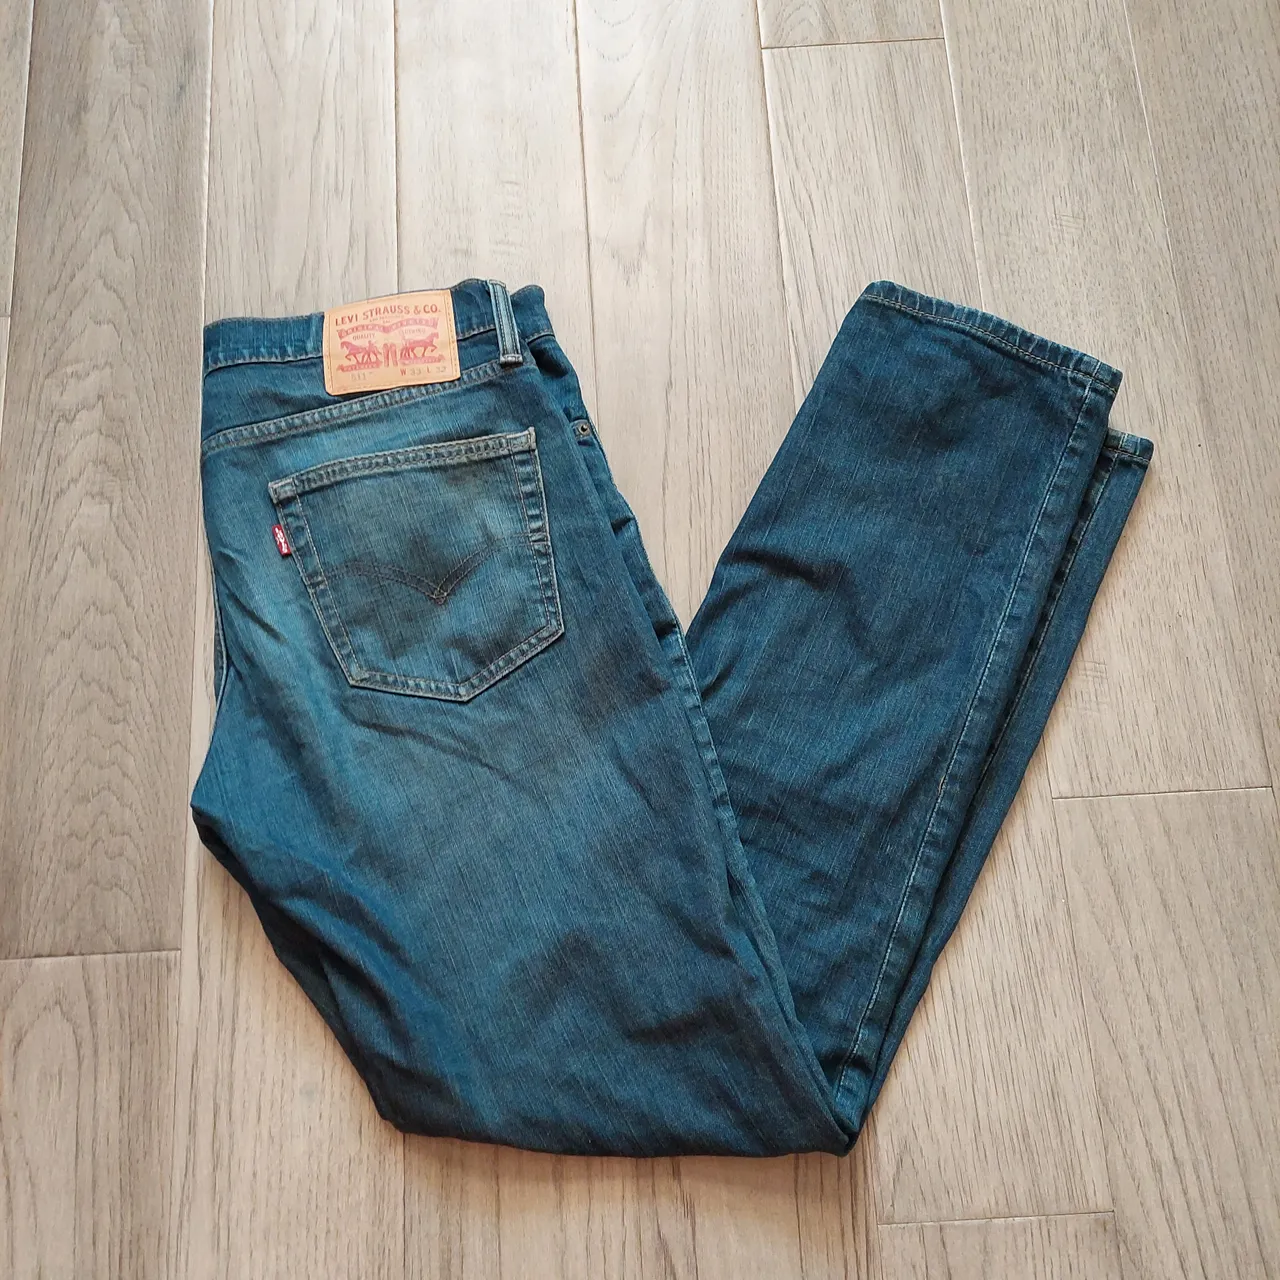 Mens 511 Levi Strauss blue denim jeans
 photo 1